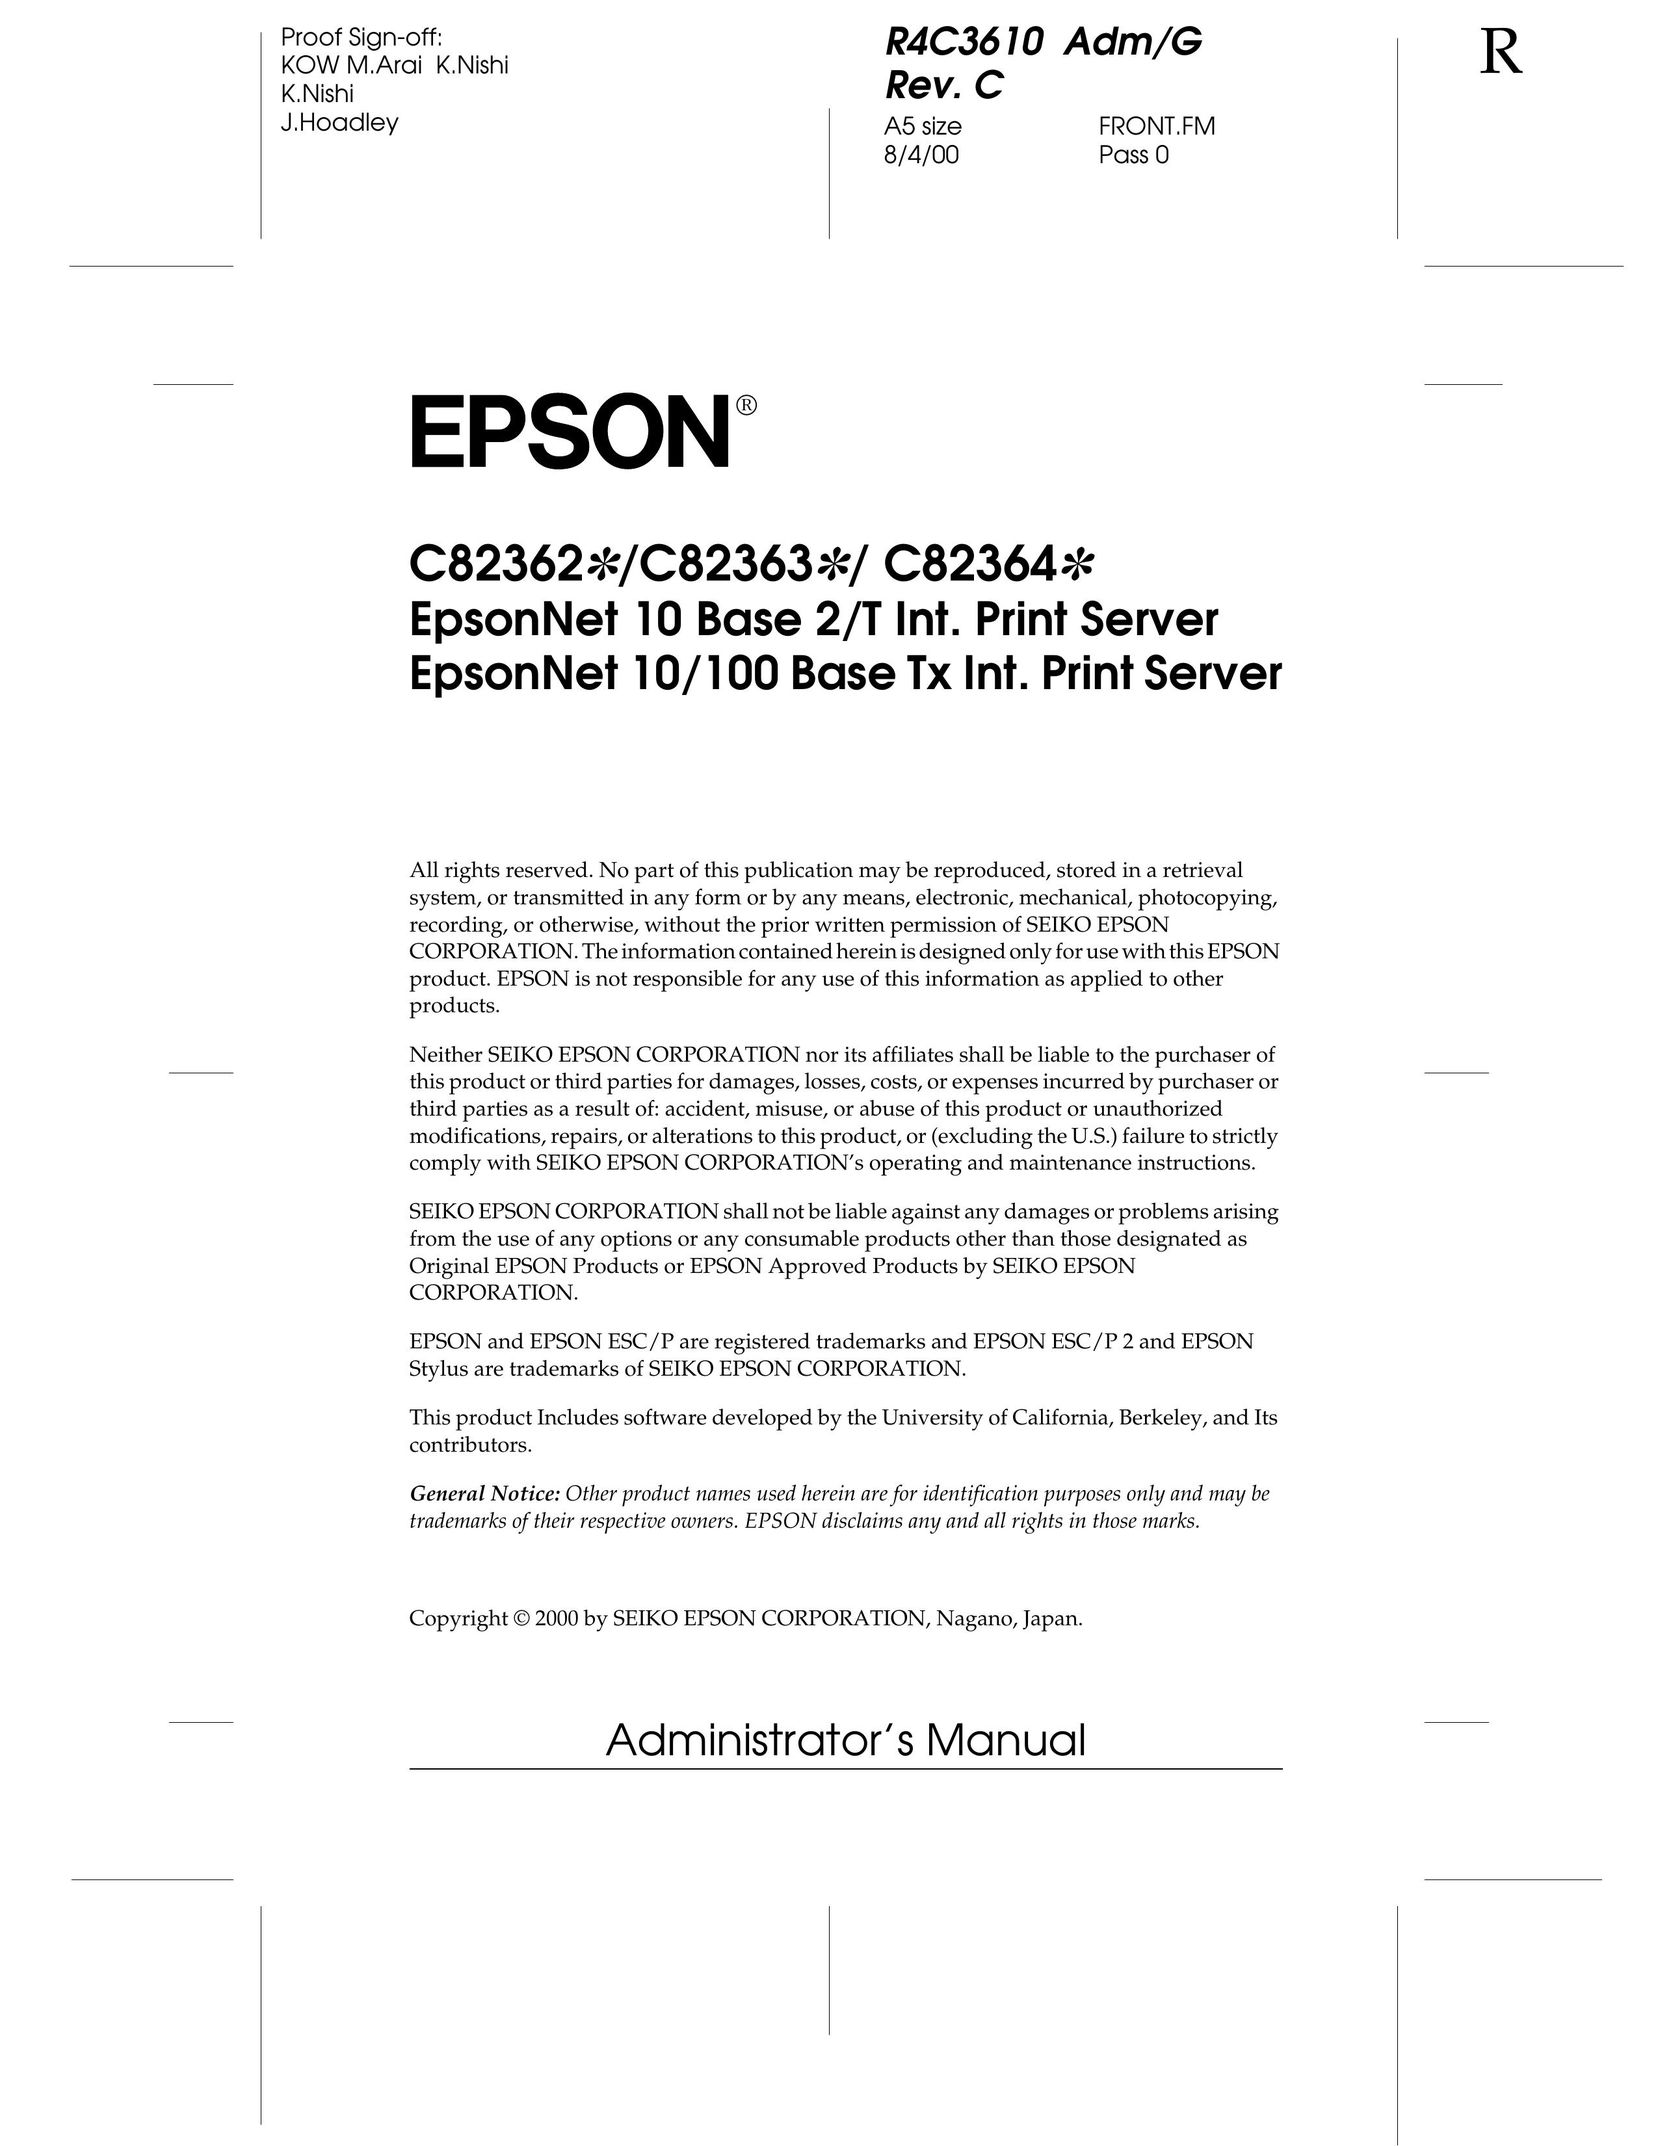 Epson C82363 Network Card User Manual